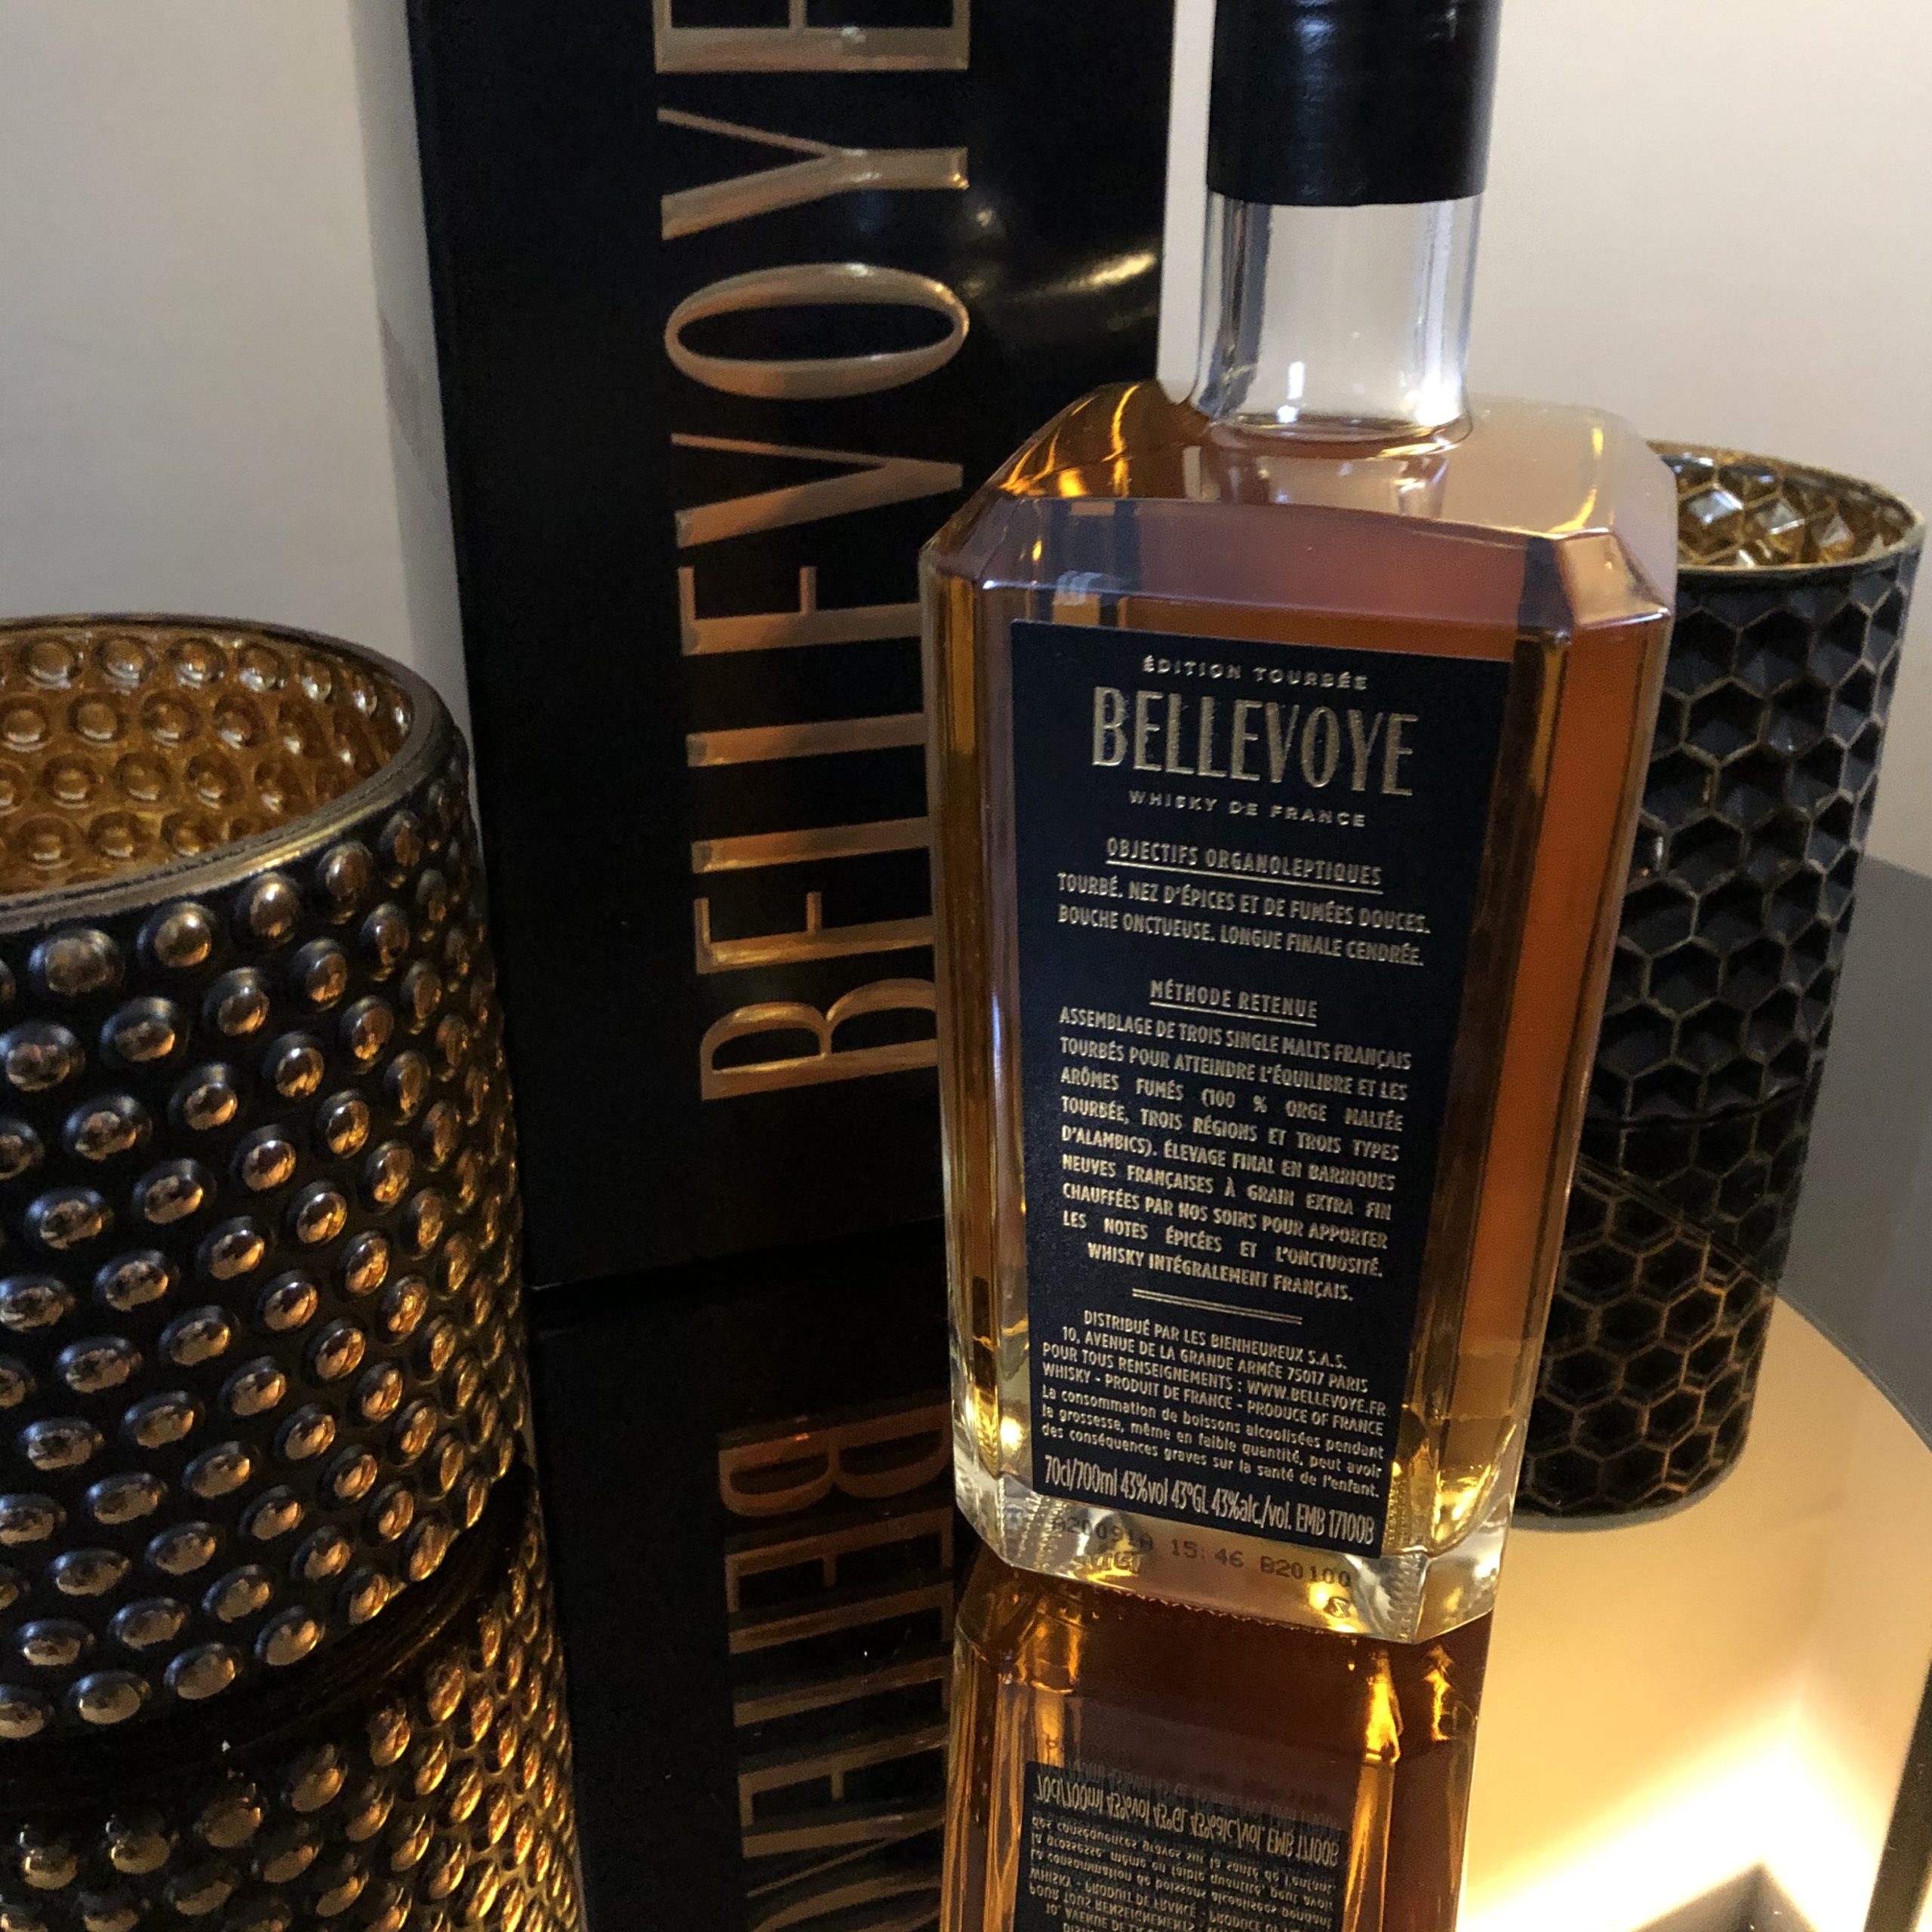 Whisky Bellevoye Noir Edition Tourbée